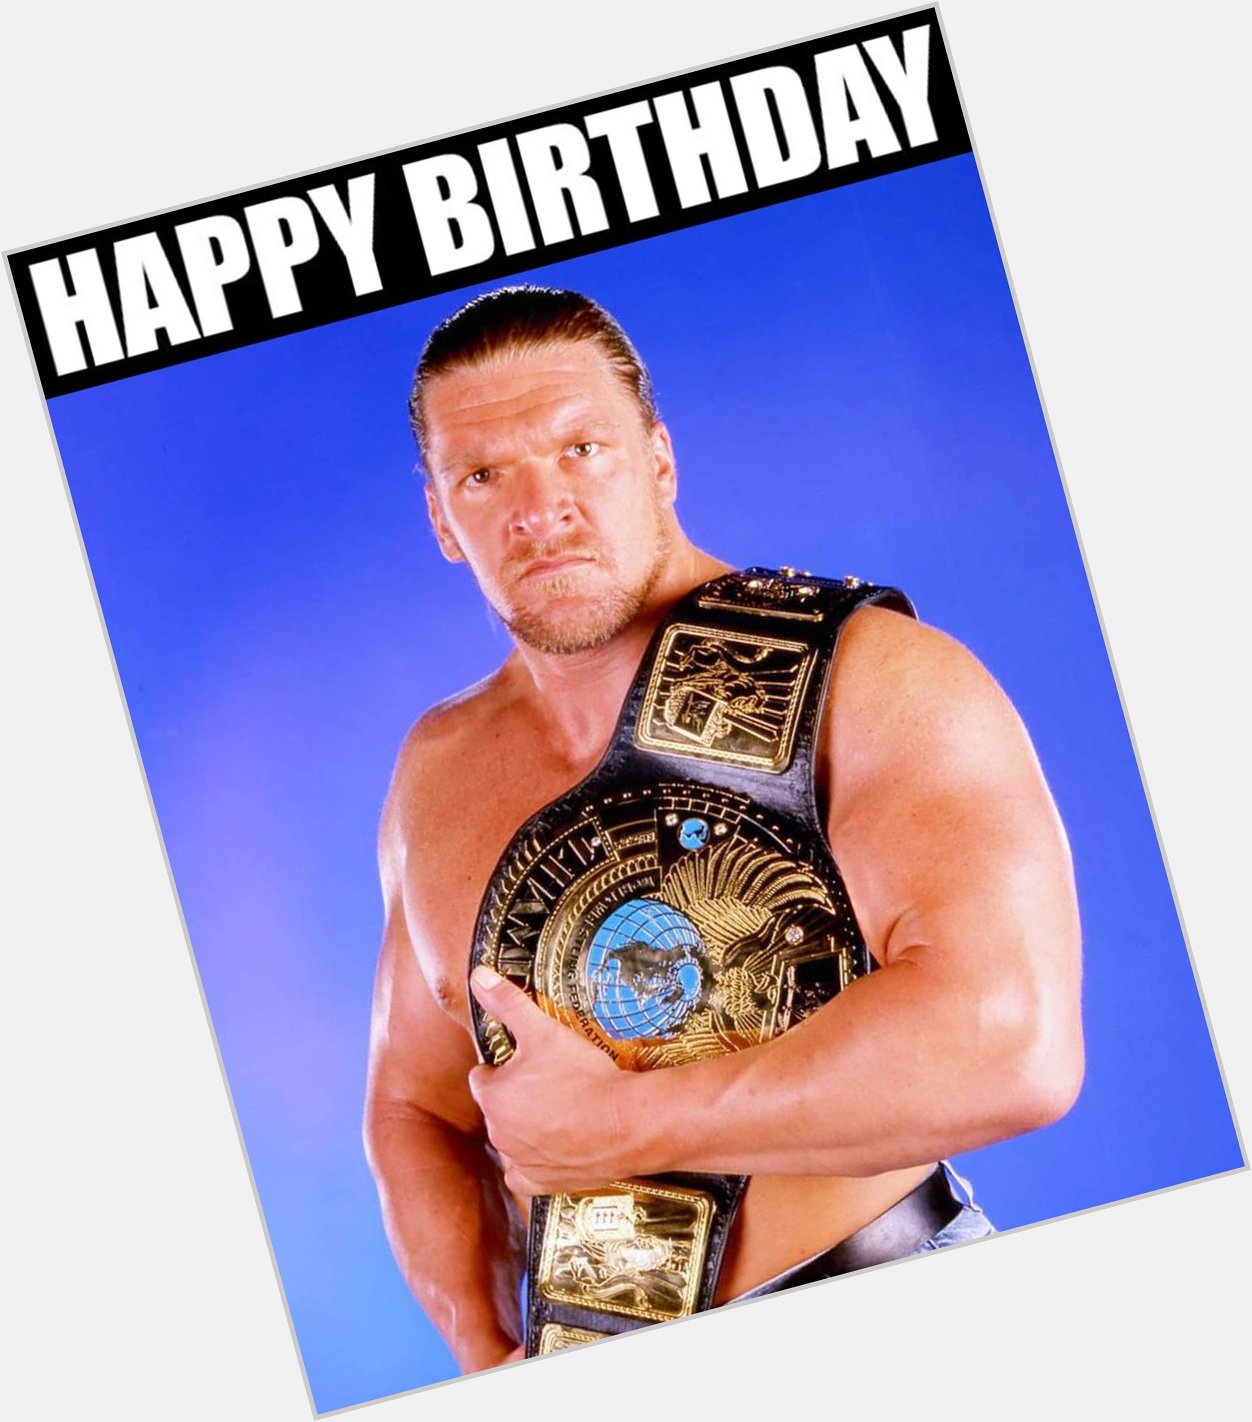 Old School WWF Legend \"The Game\" Triple H celebrates his 51st birthday today. HAPPY BIRTHDAY    